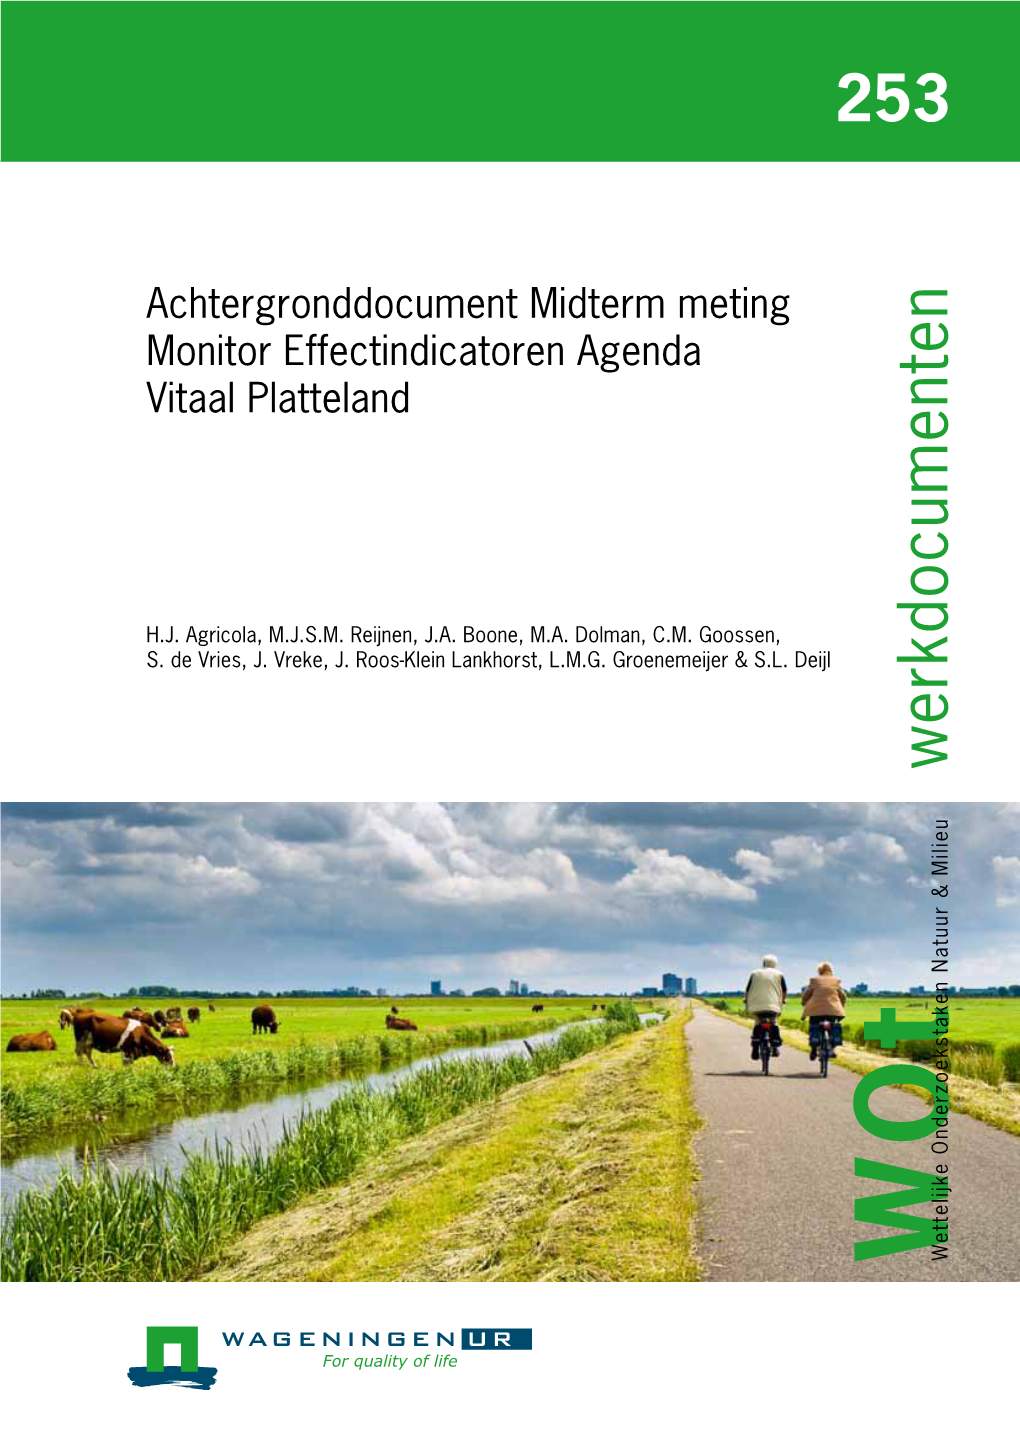 Achtergronddocument Midterm Meting Monitor Agenda Vitaal Platteland 7